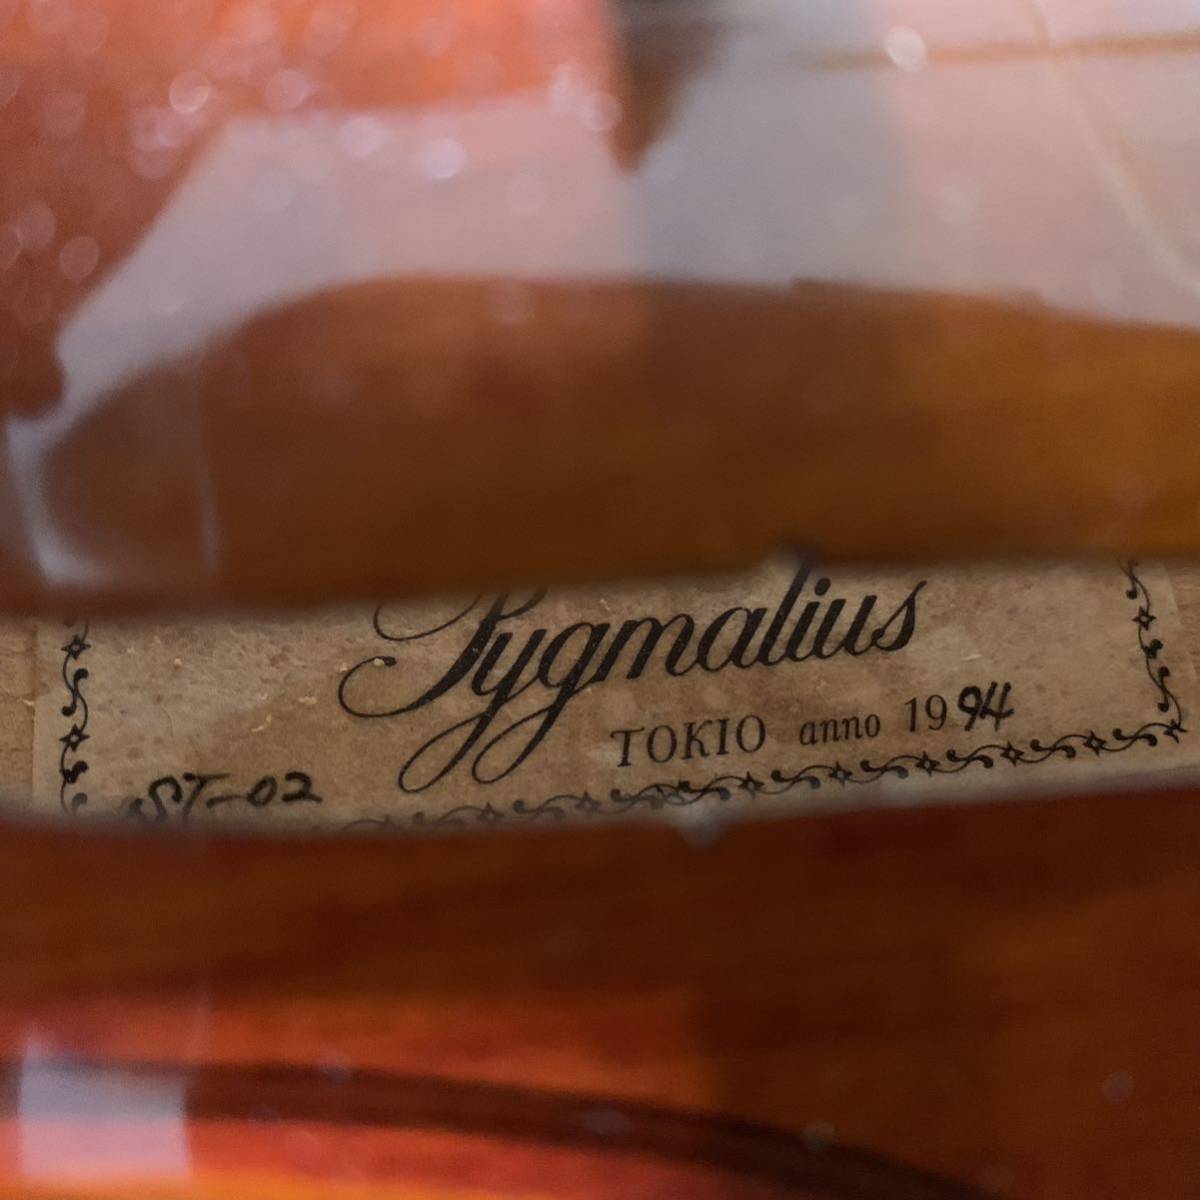 【K1】 Pygmalius ST-02 バイオリン 4/4 ピグマリウス ヴァイオリン 1345-174_画像2